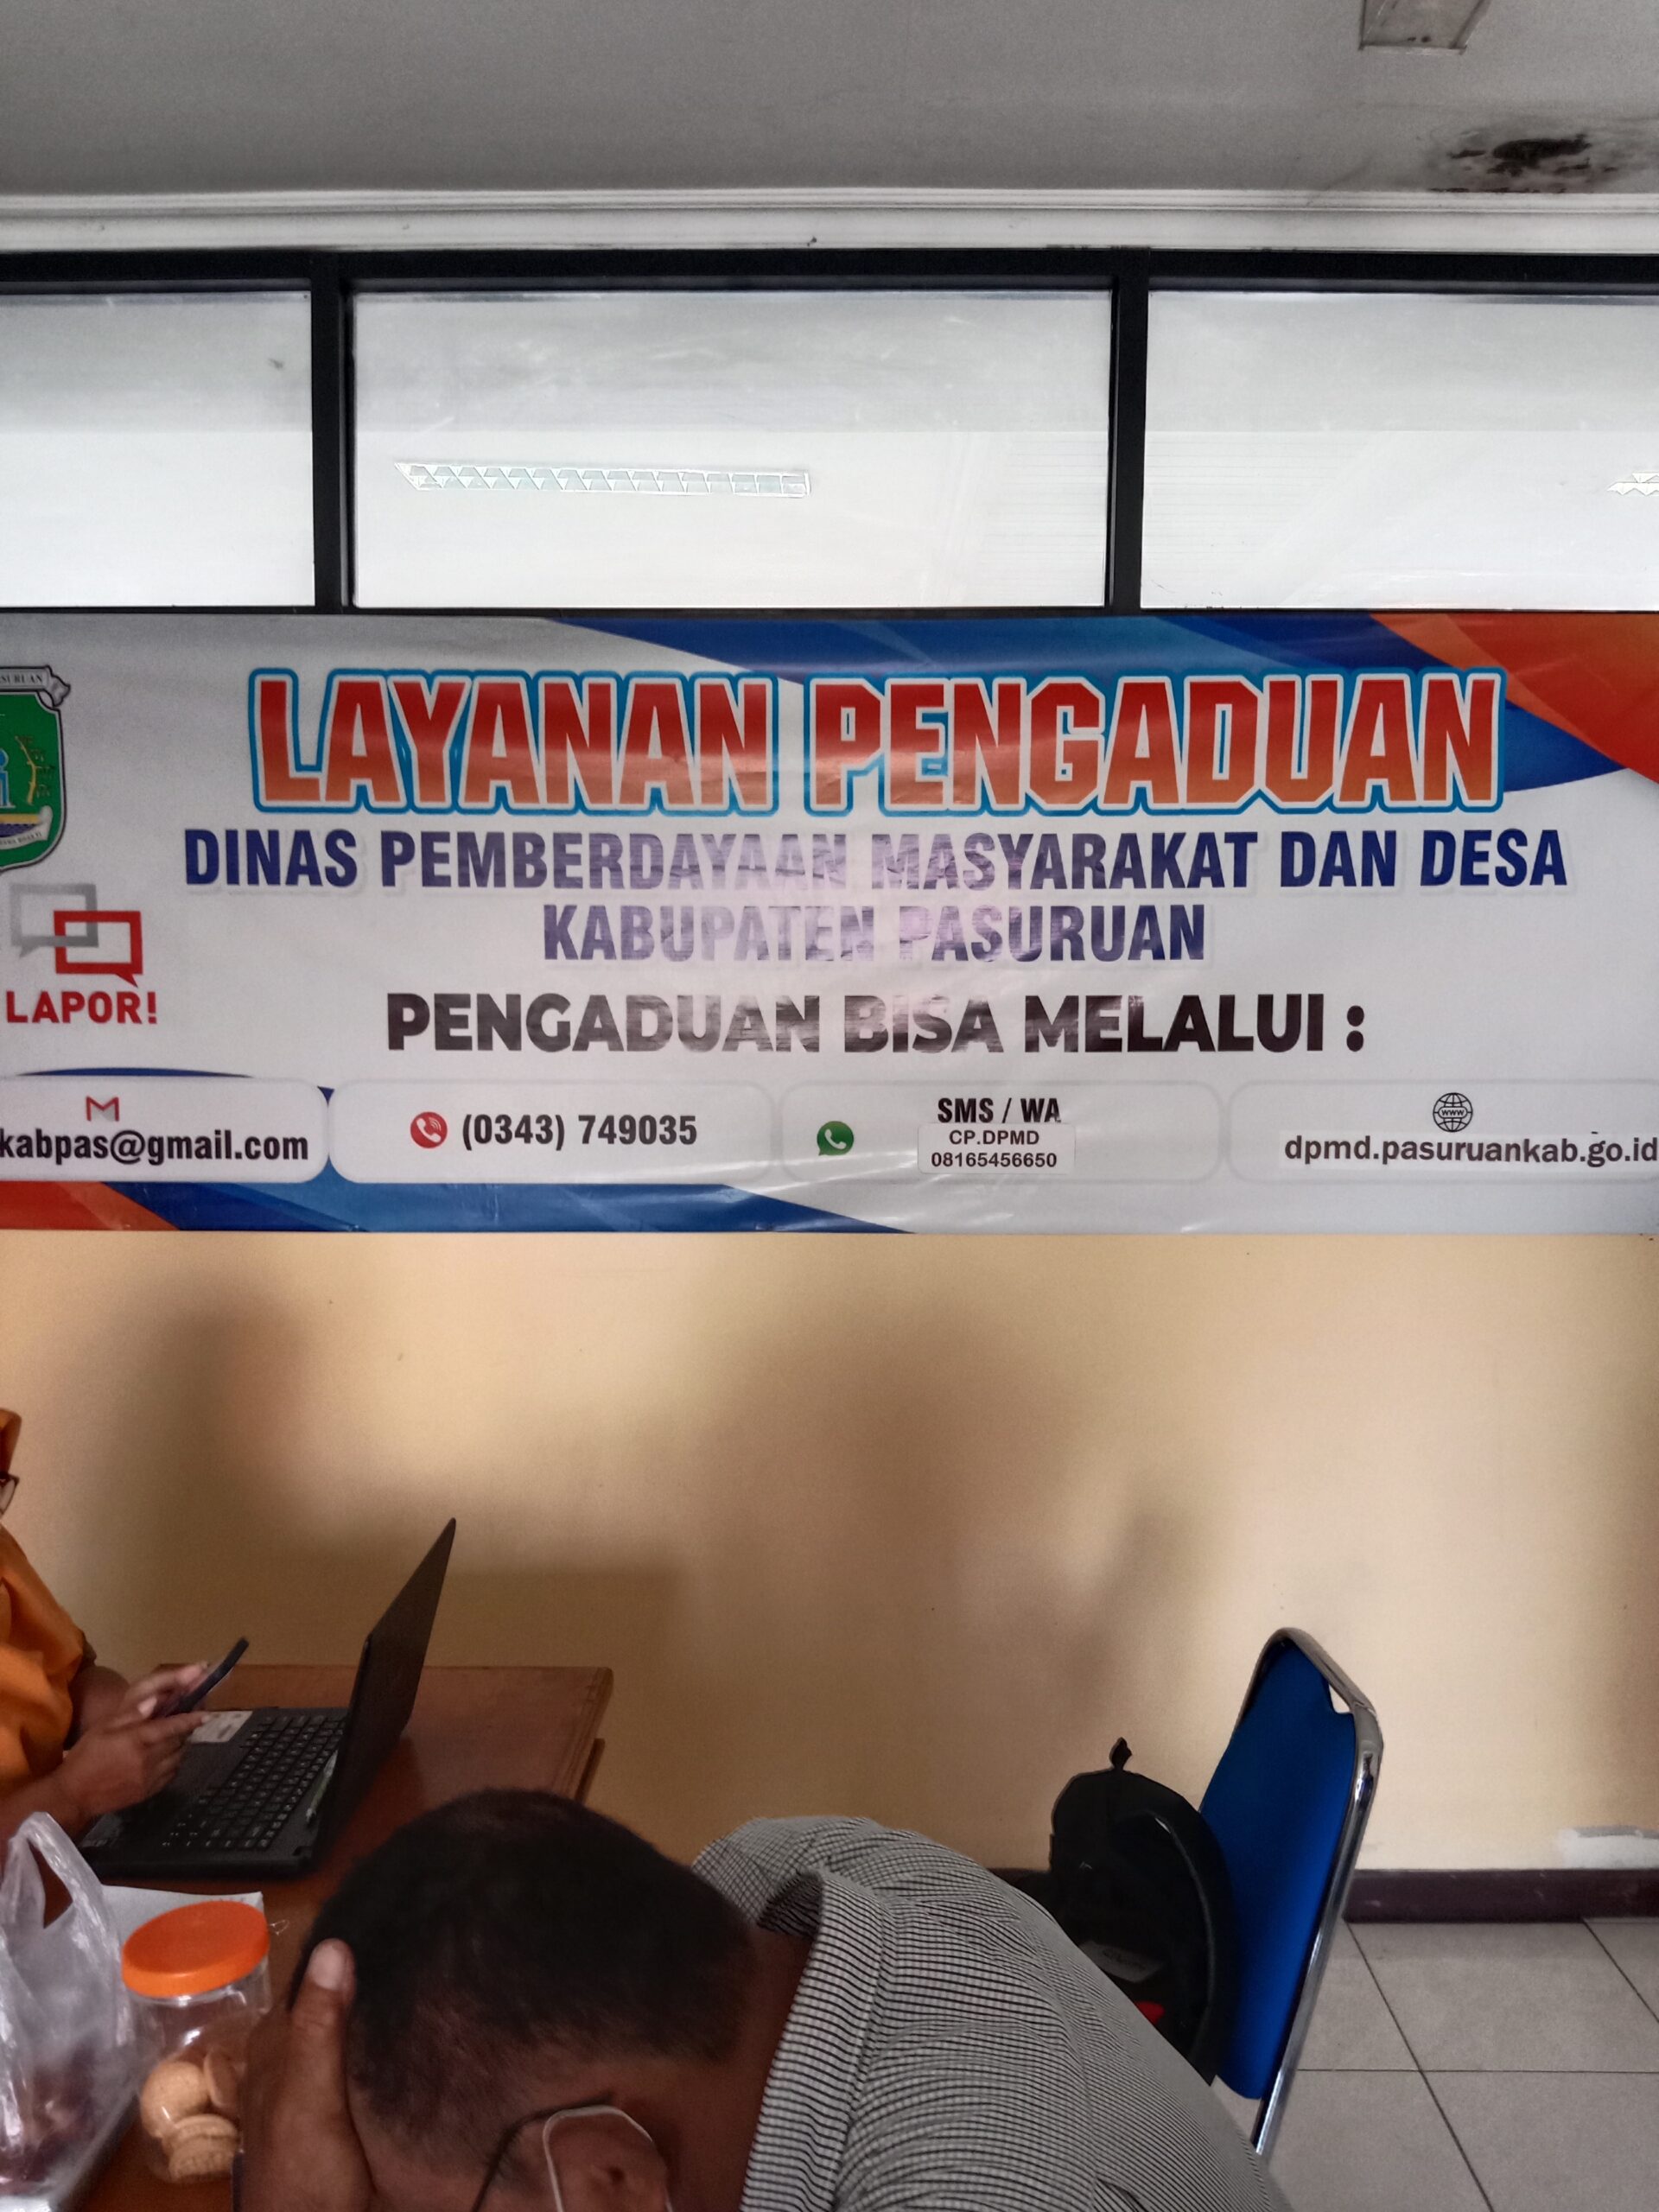 Kepala Kadis DPMD Kabupaten Pasuruan, Rido Nugroho Dipertanyakan